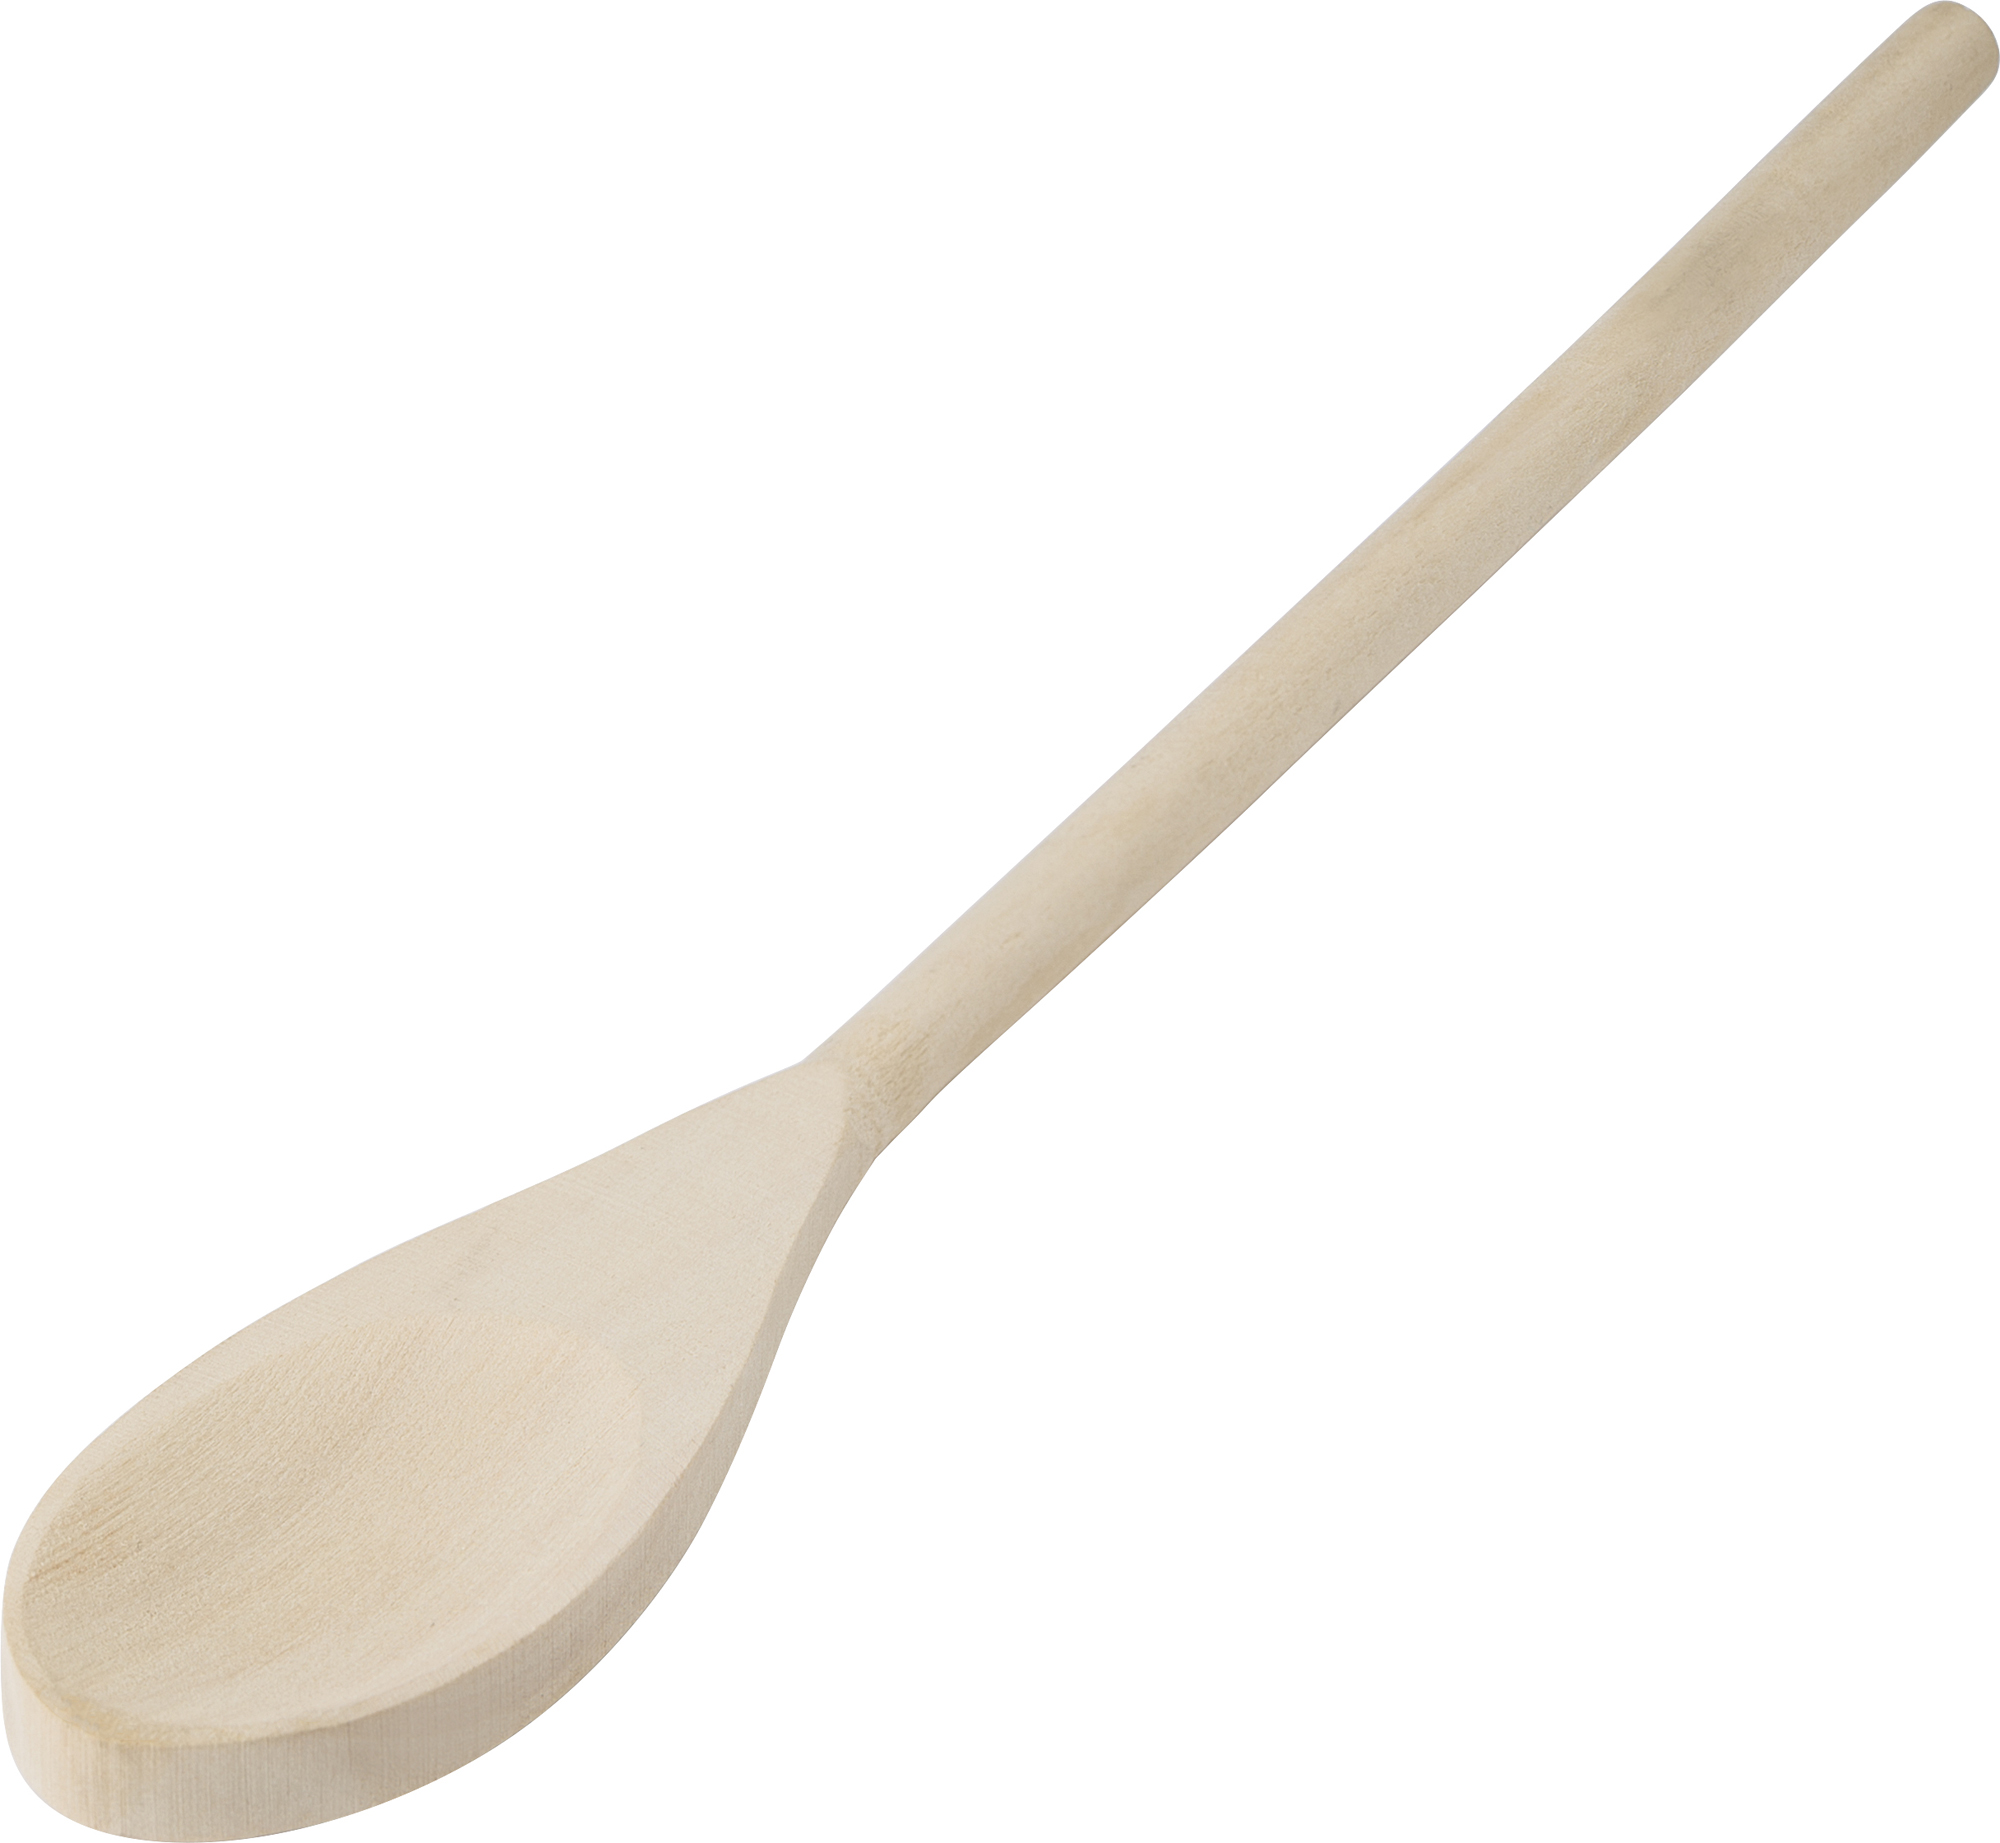 000000970716 011999999 3d045 rgt pro01 2023 fal - Wooden spoon